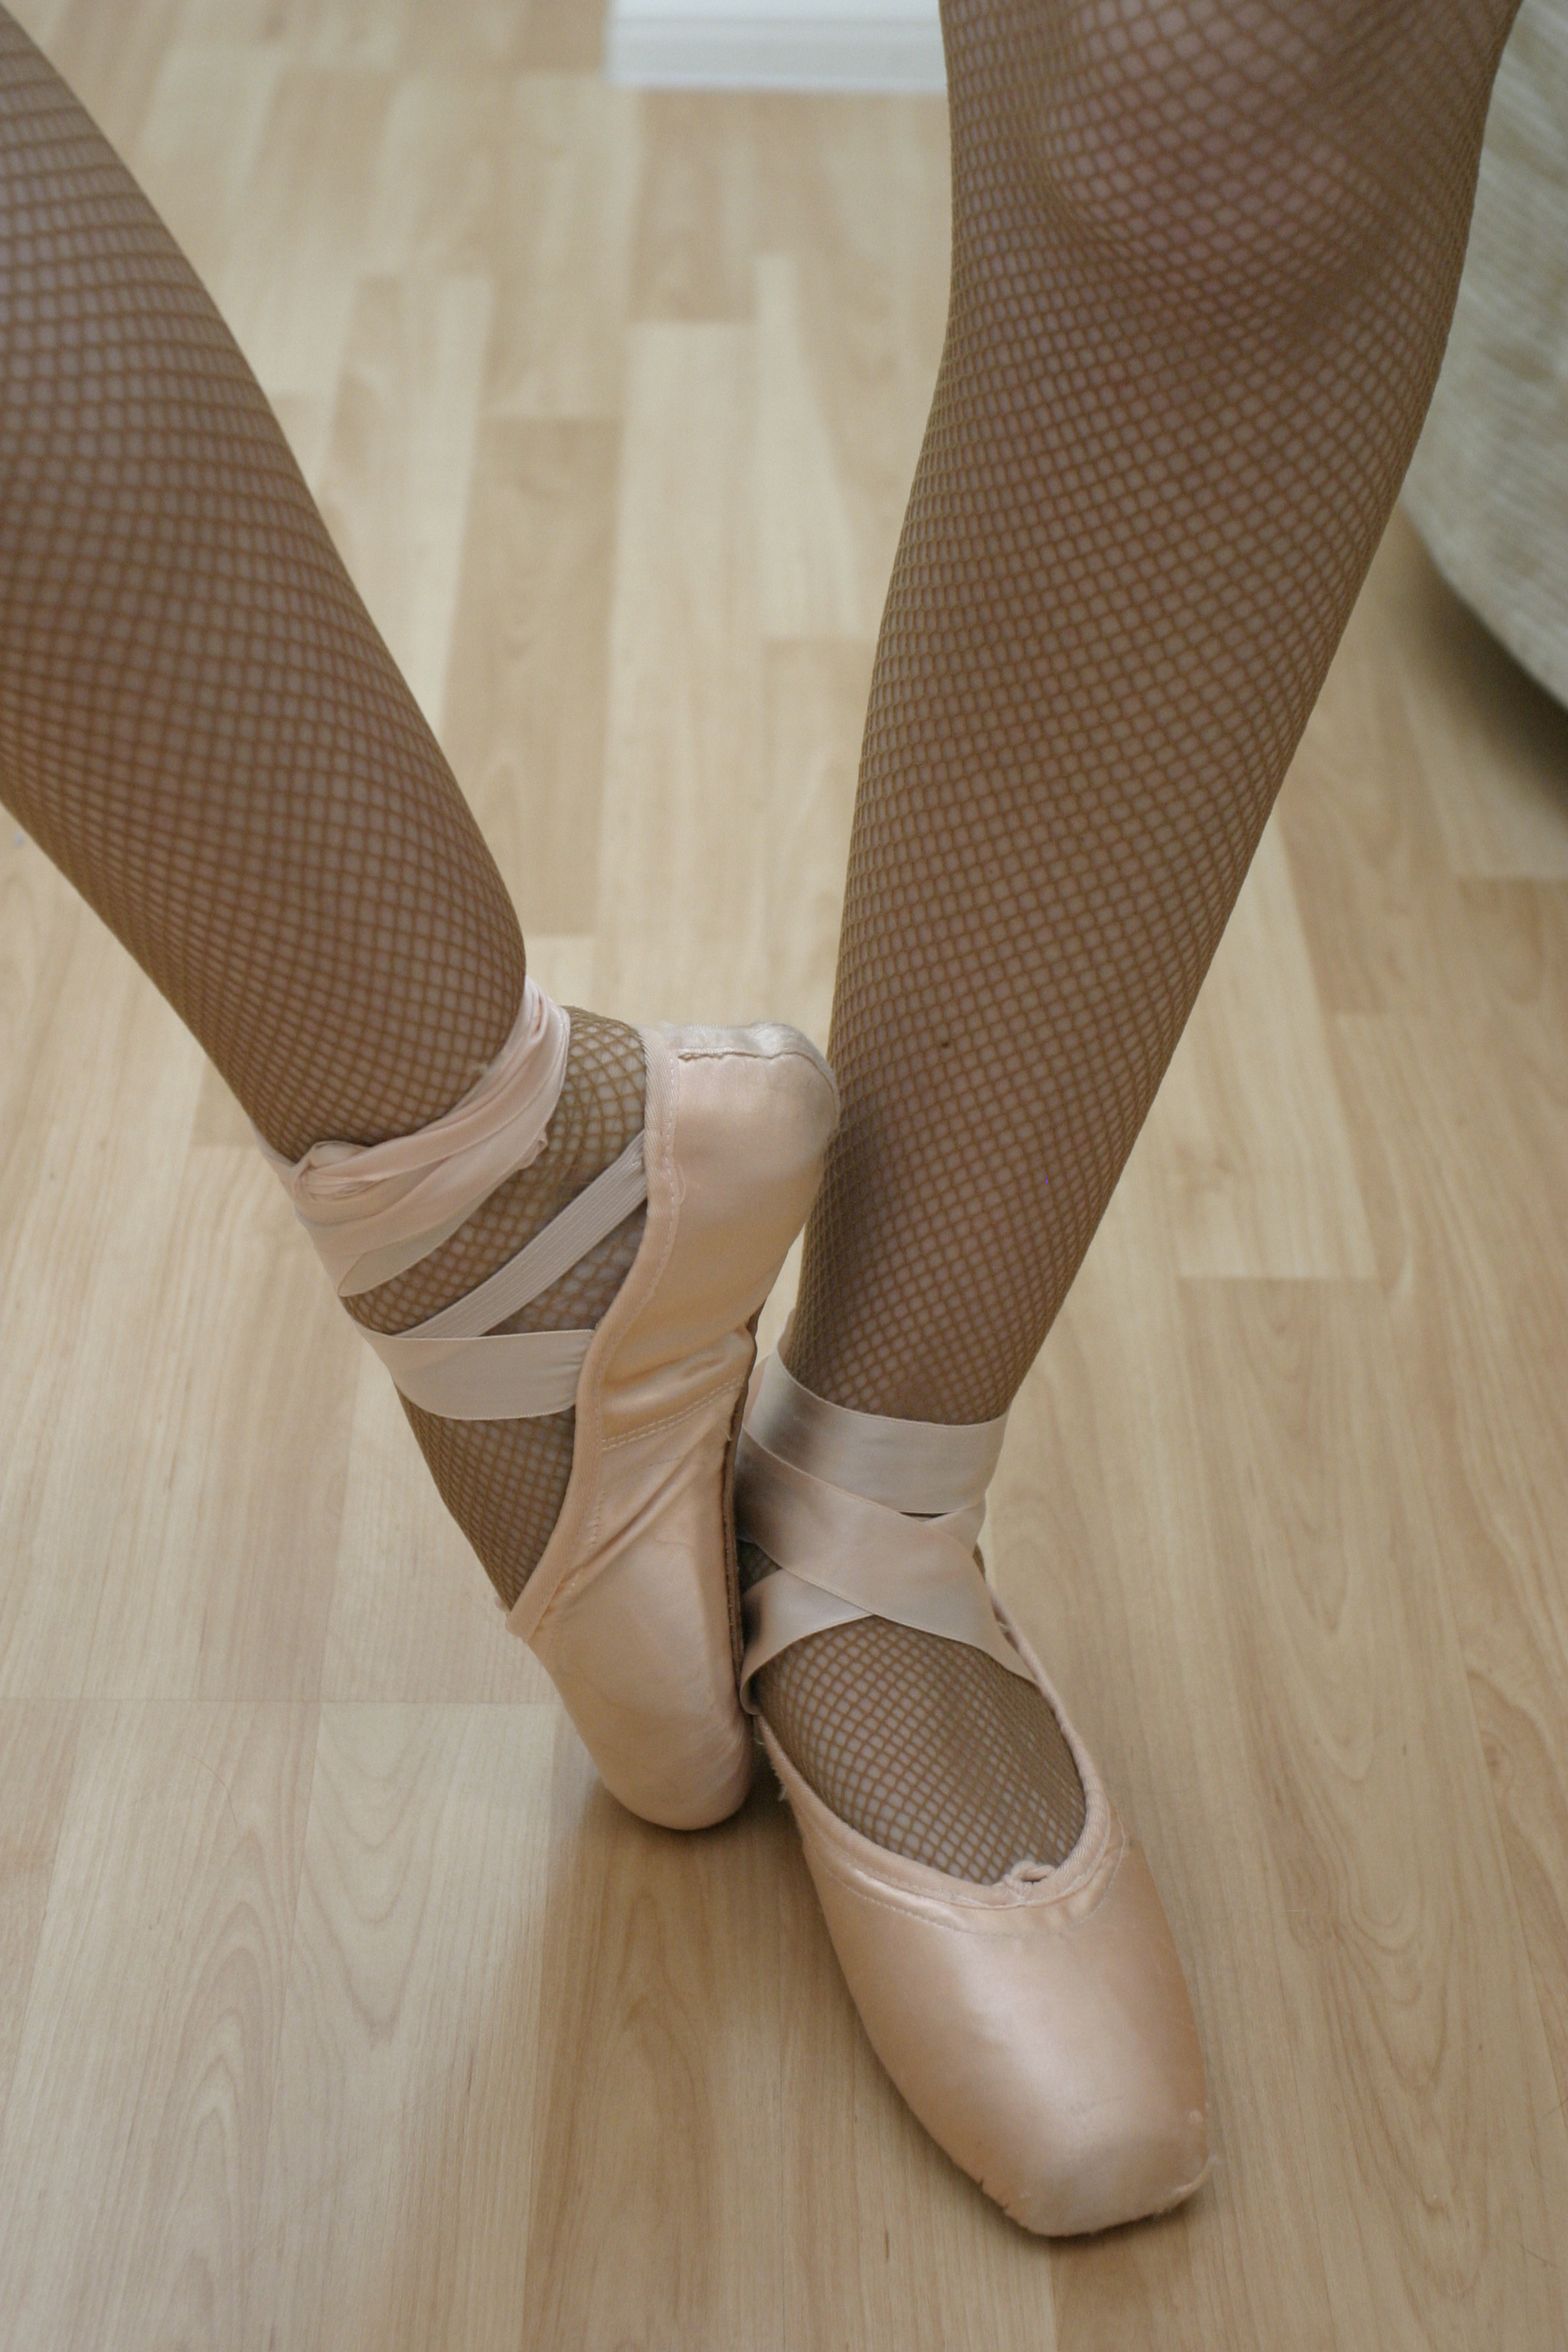 Ballet Pointe Shoes Hot Girls Wallpaper